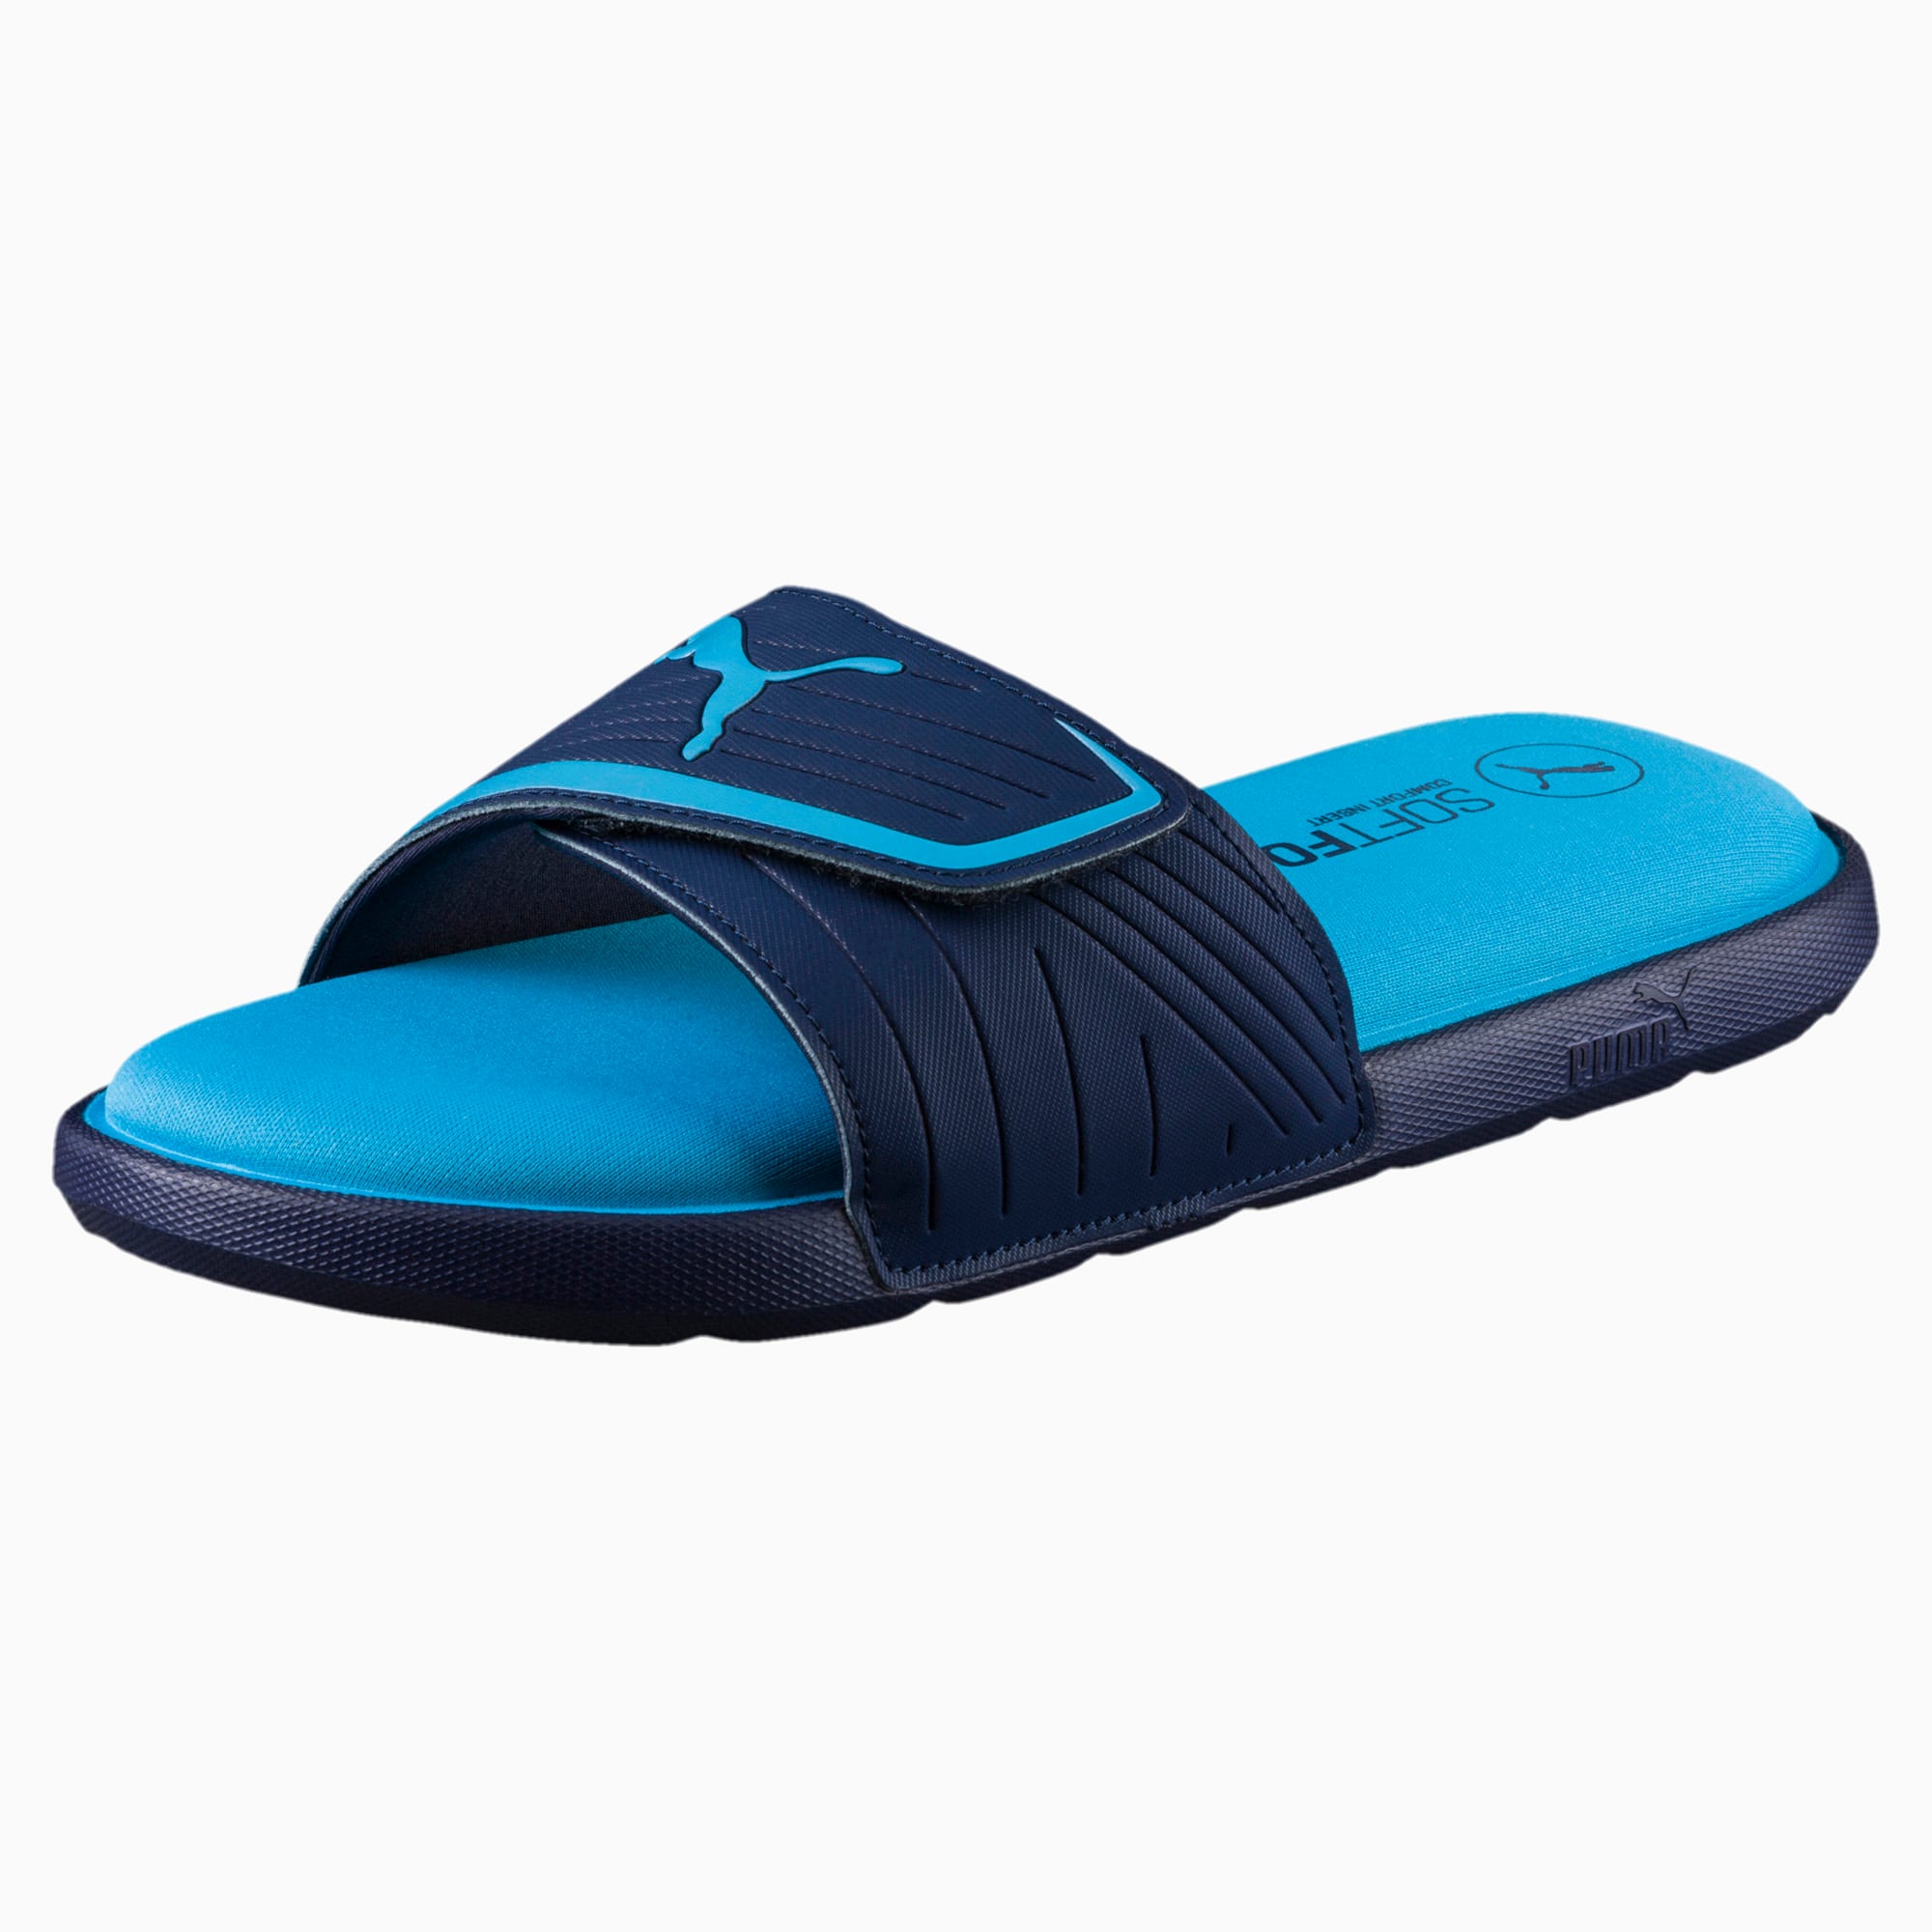 Starcat SoftFoam Men's Sandals | PUMA US